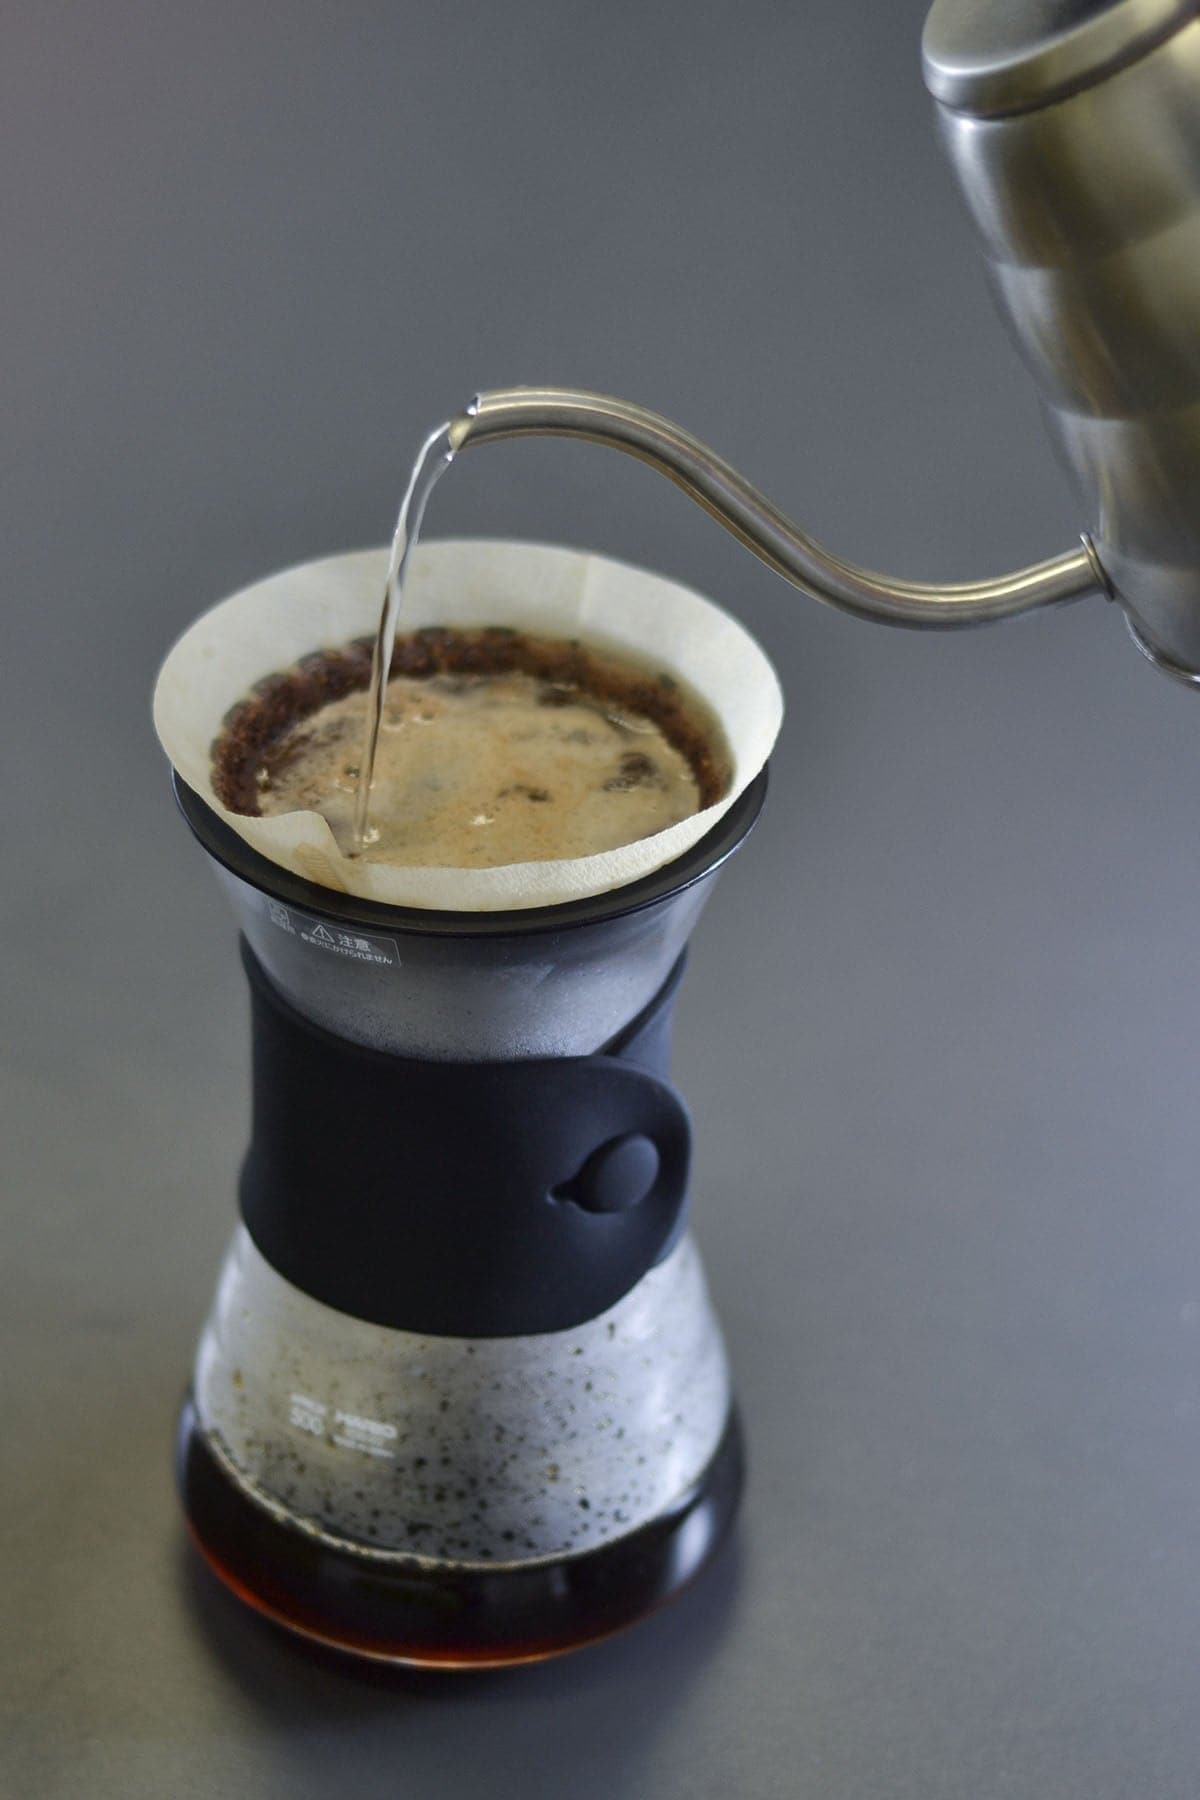 Hario V60 Drip Decanter Pour Over Coffee Maker 700ml - Balance Coffee